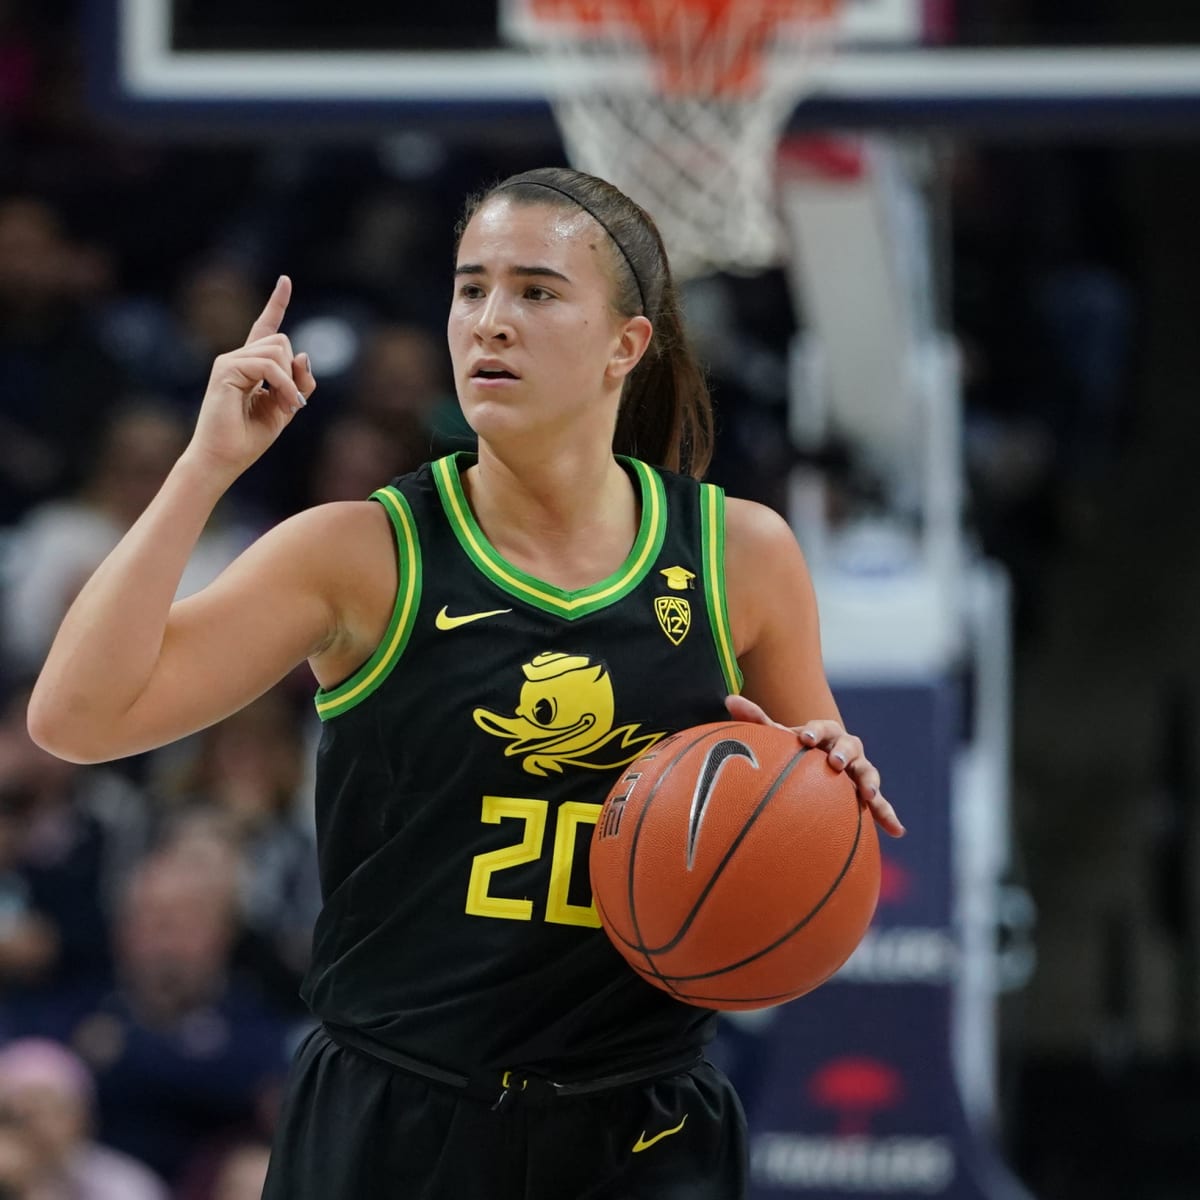 Oregon's Ionescu looks forward to pro career in the WNBA - The San